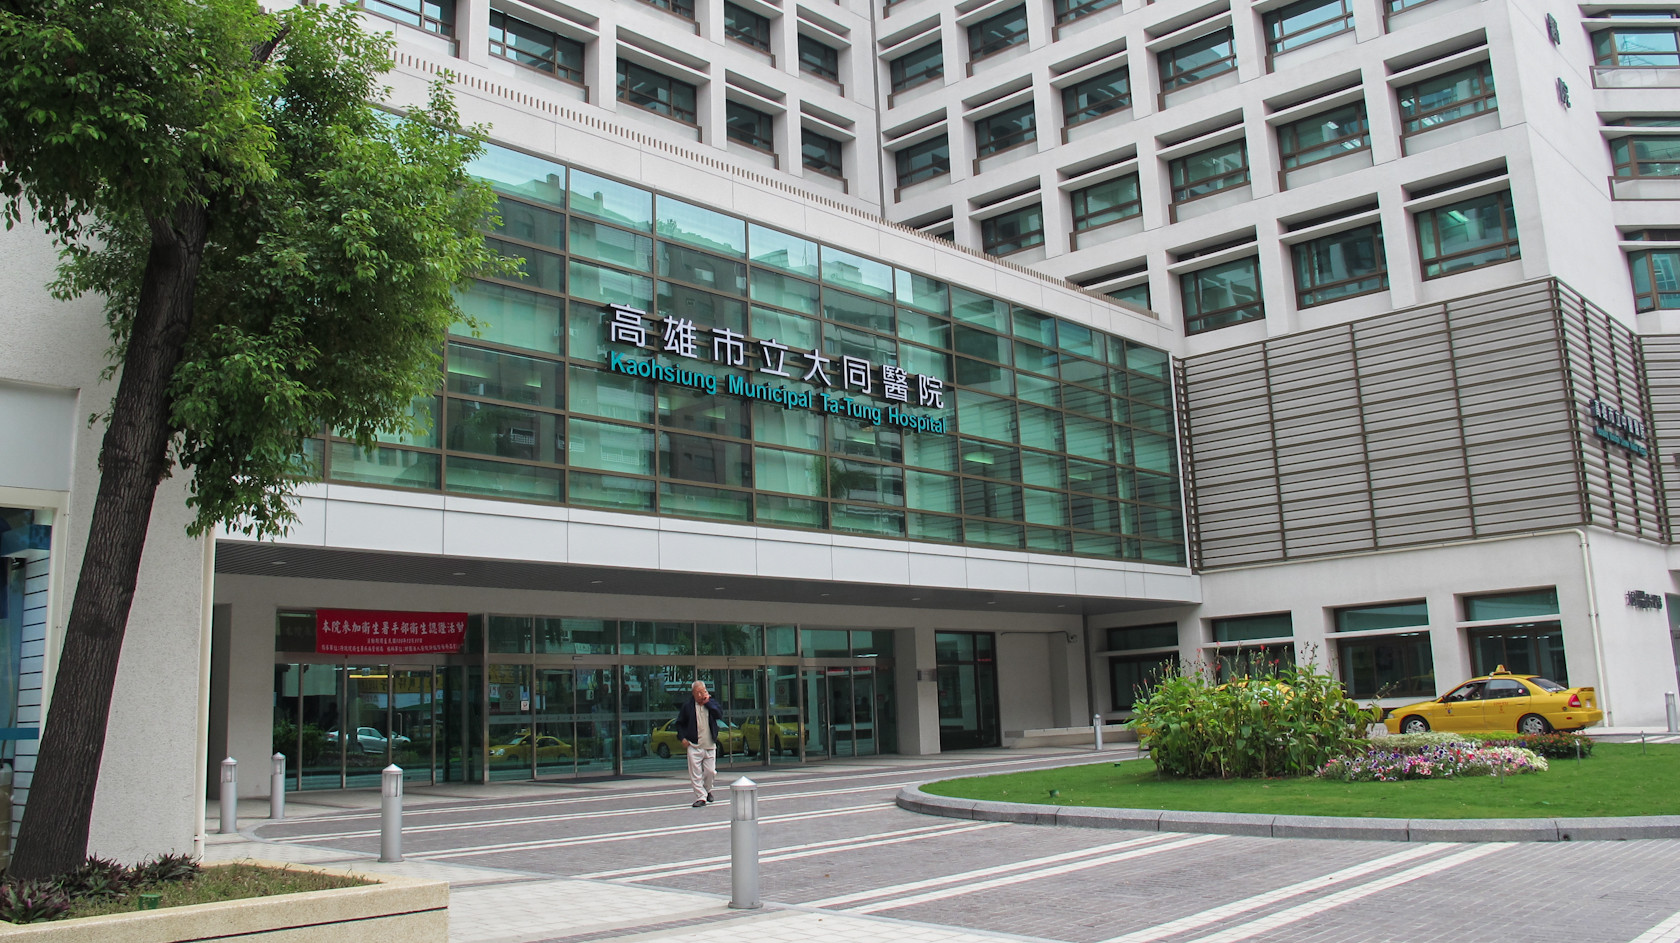 Kaohsiung Municipal Ta-Tung Hospital